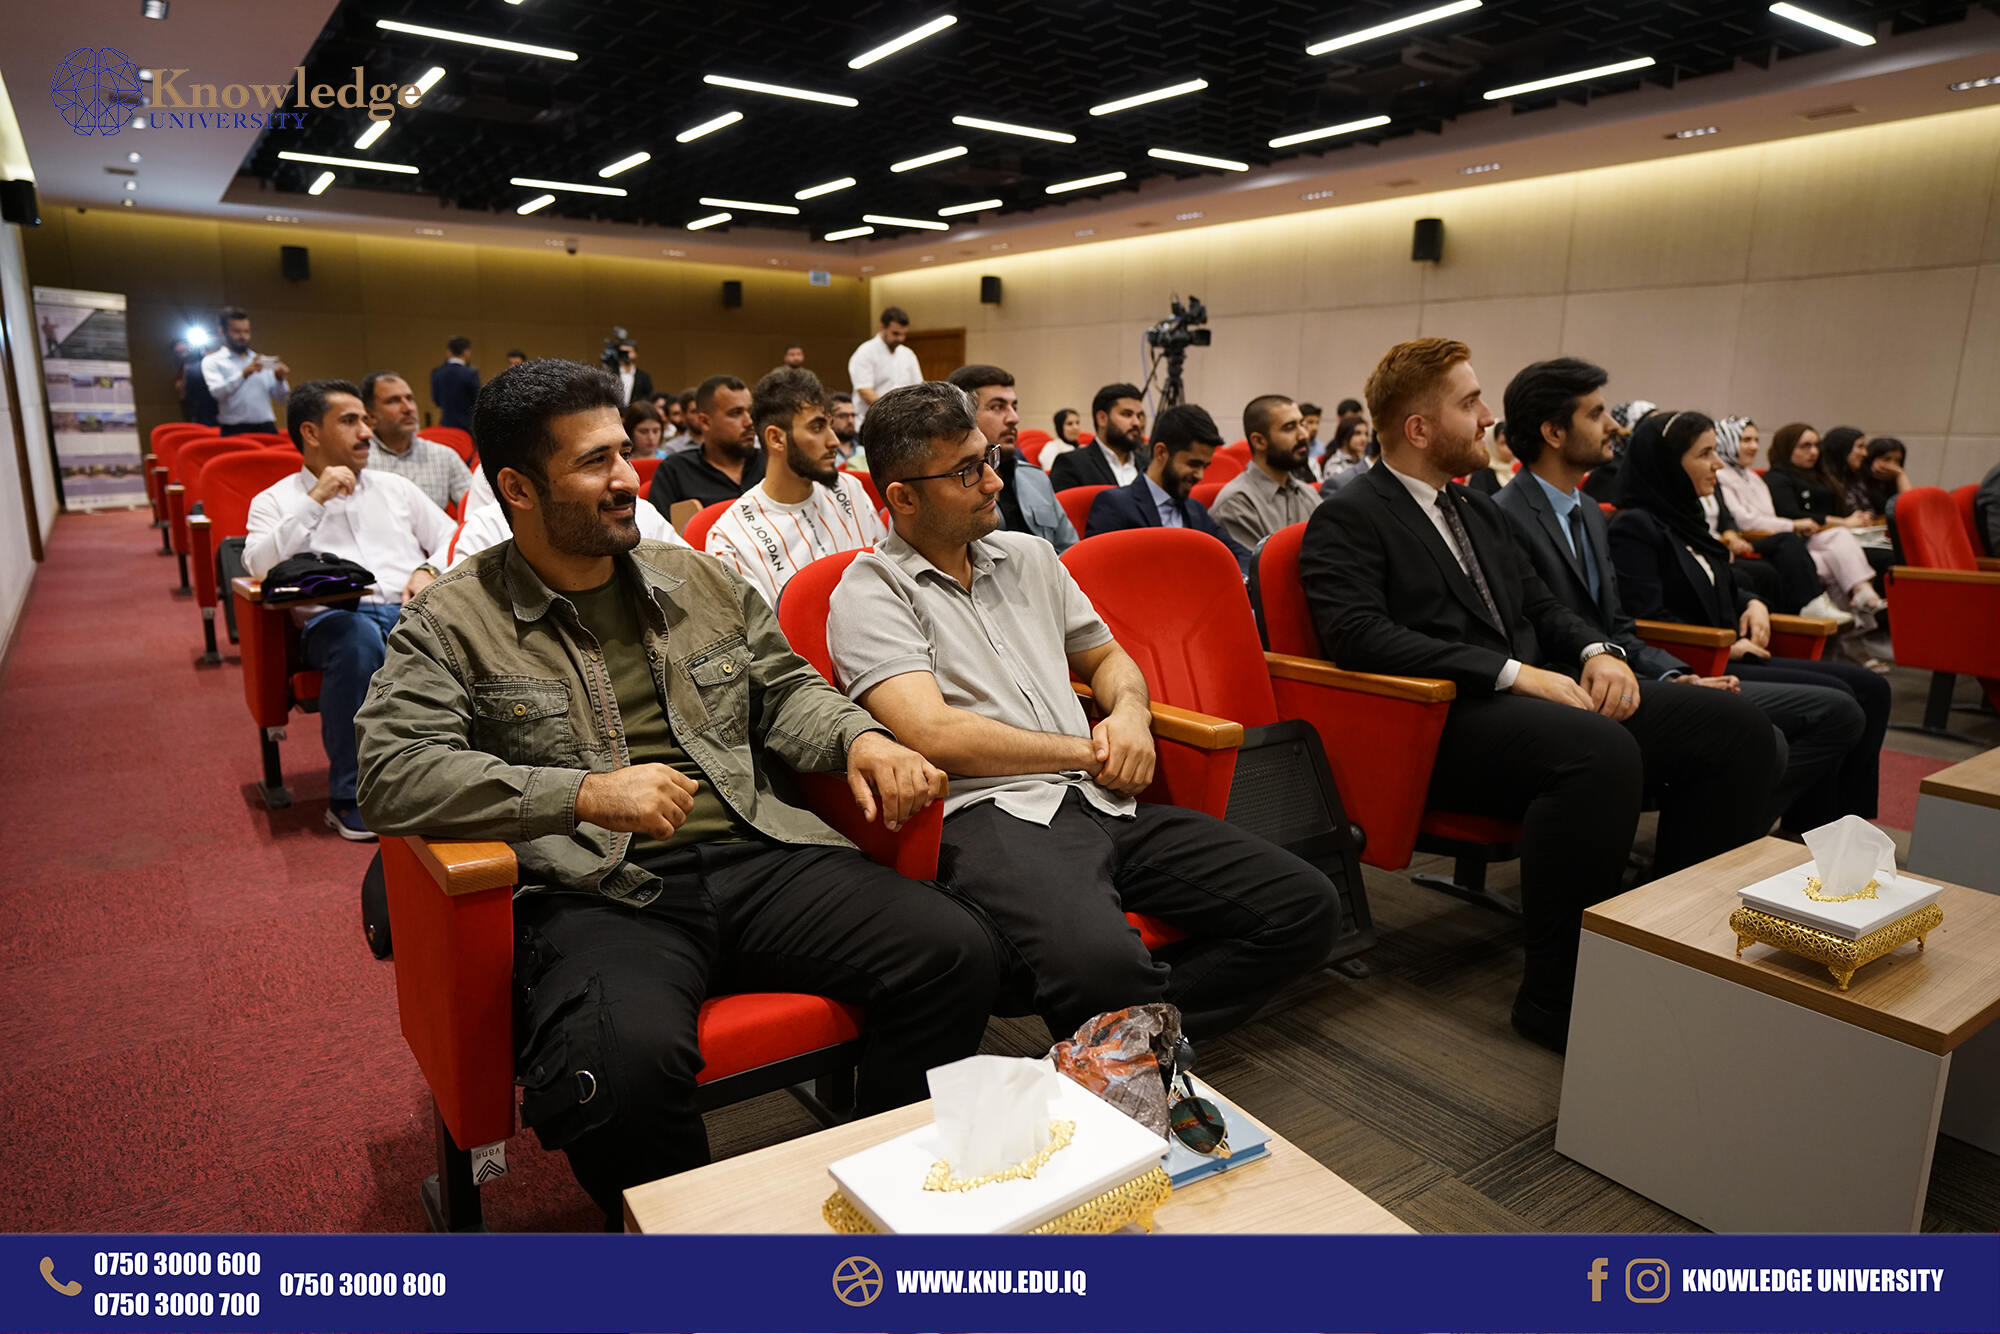 Petroleum Engineering and Hasar Organization Host National Workshop on Nature Nurturing>